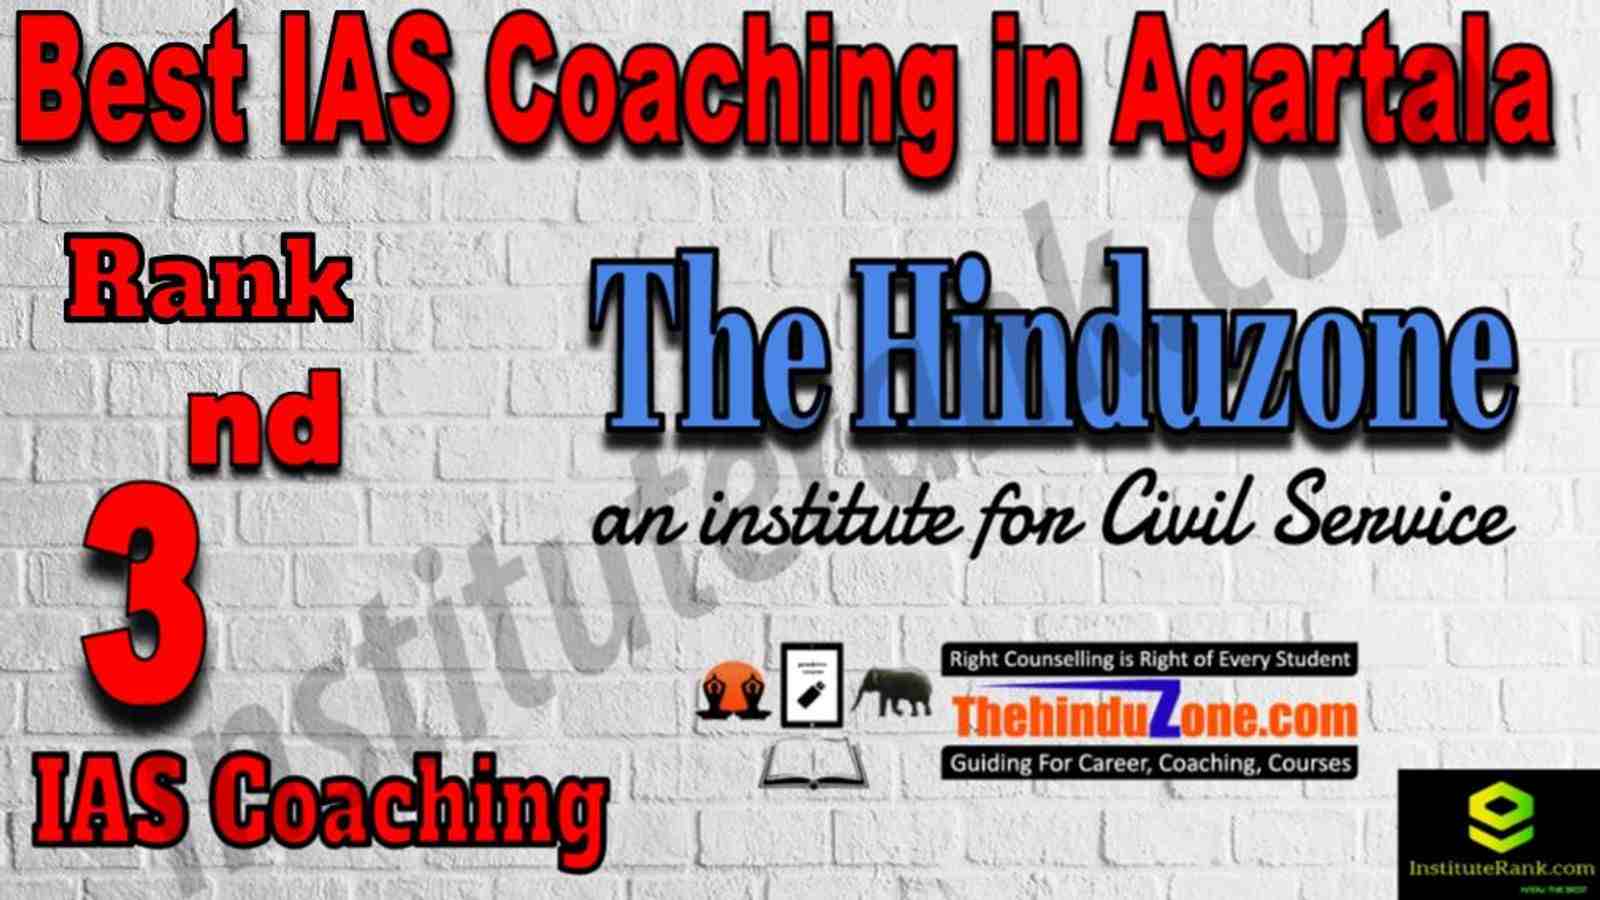 3rd Best IAS Coaching in Agartala